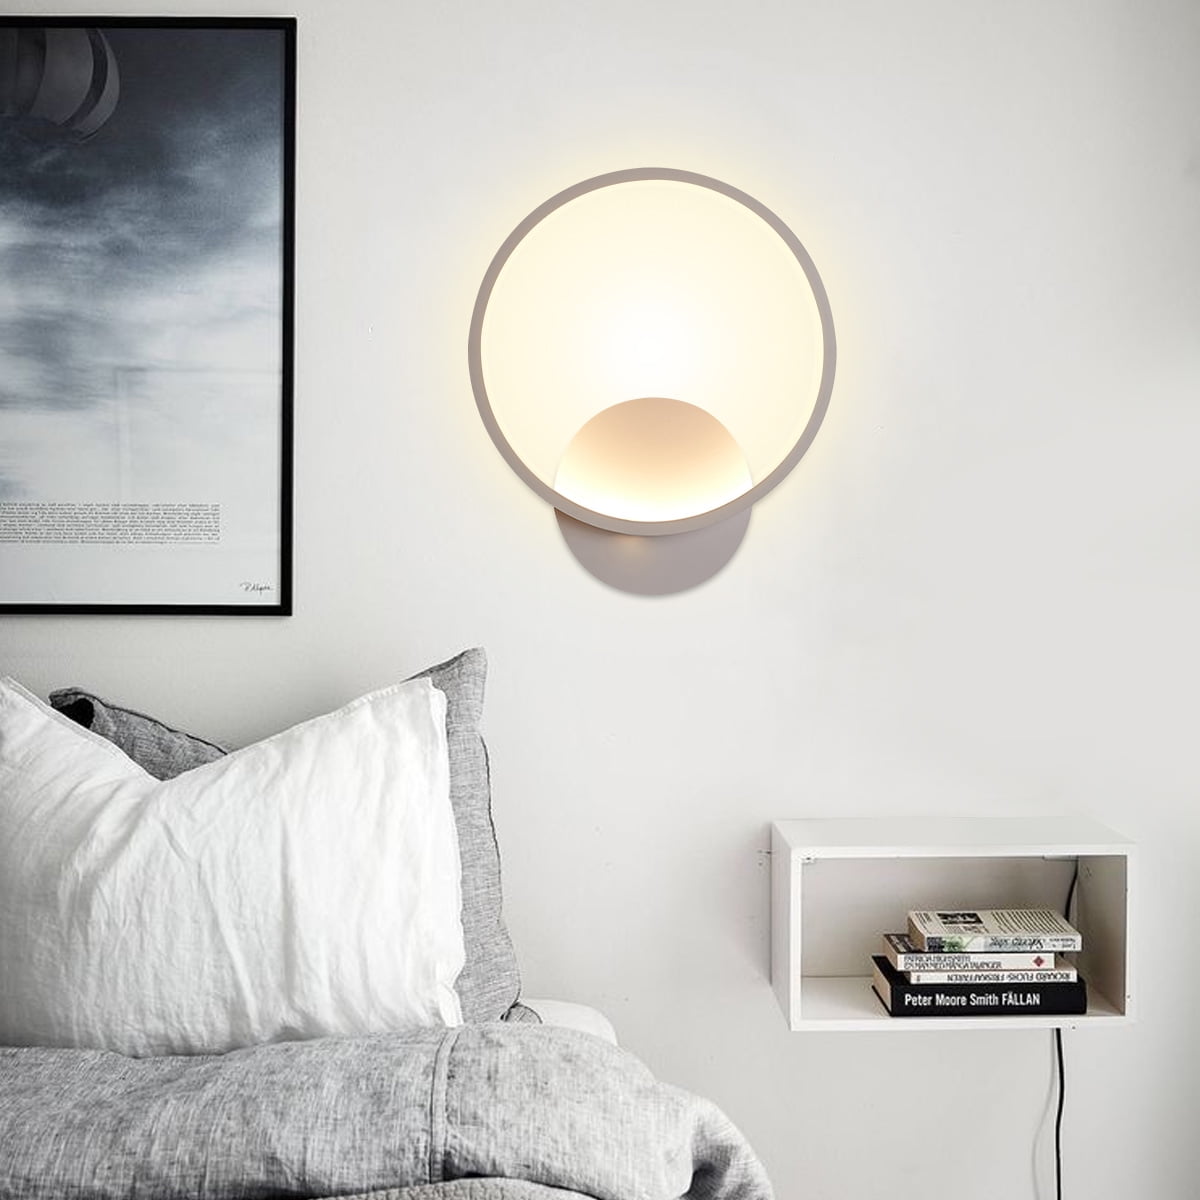 LED Wall Sconce Light Lamp For Corridor Living Room Bedroom Bathroom 